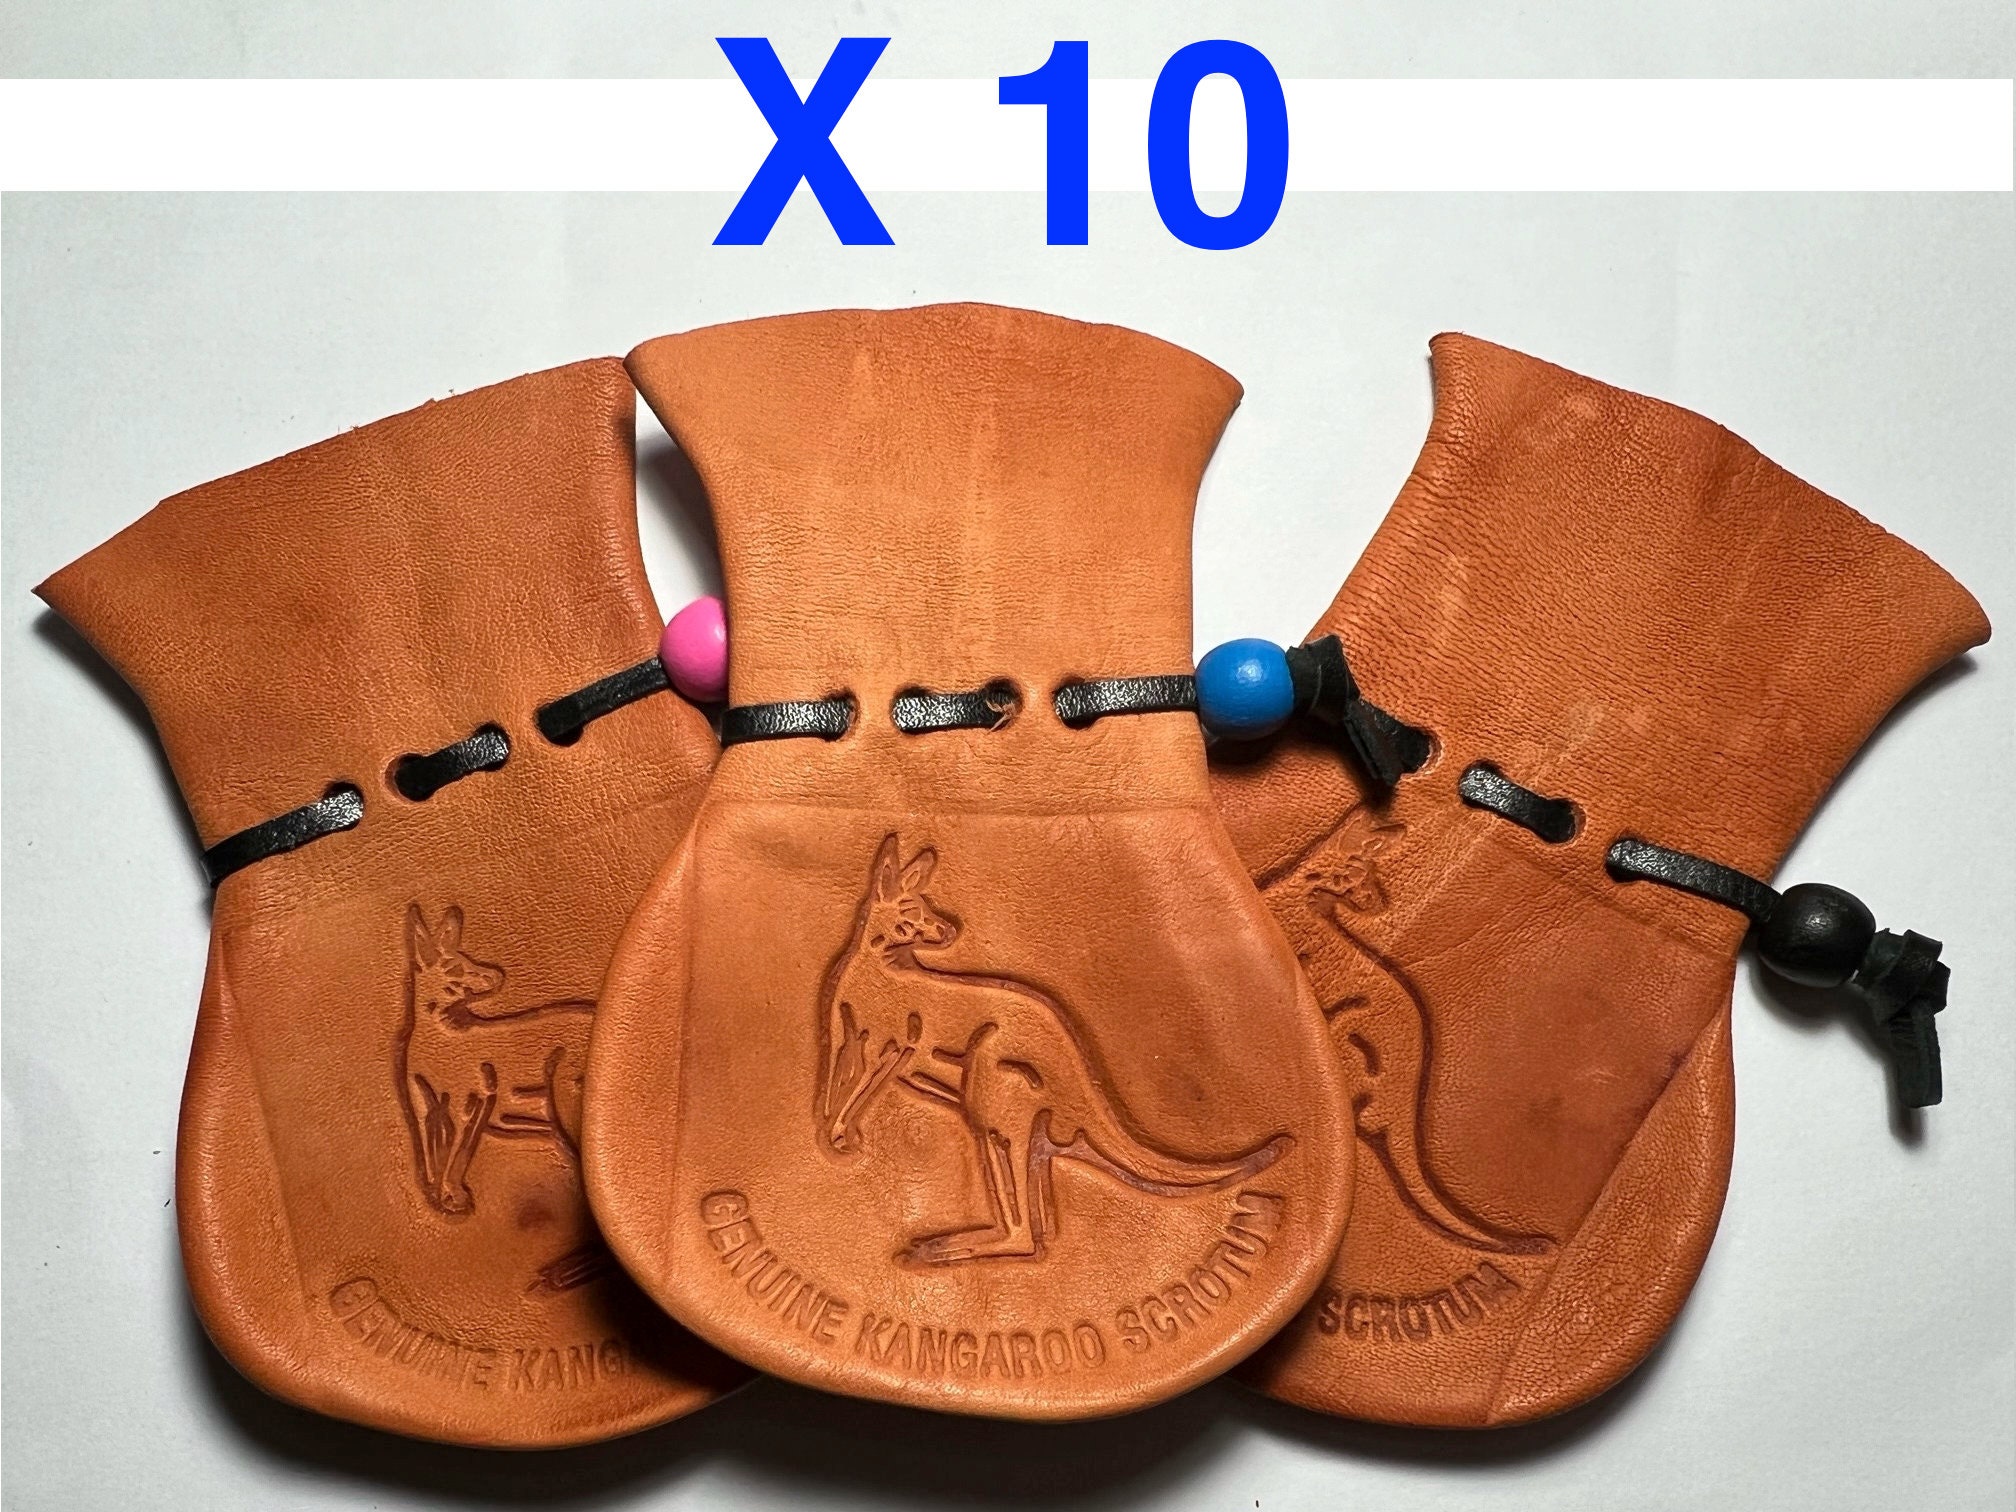 EL900-1) Kangaroo roo Coin Purse Leather scrotum purses weird Gag gift hide  | eBay